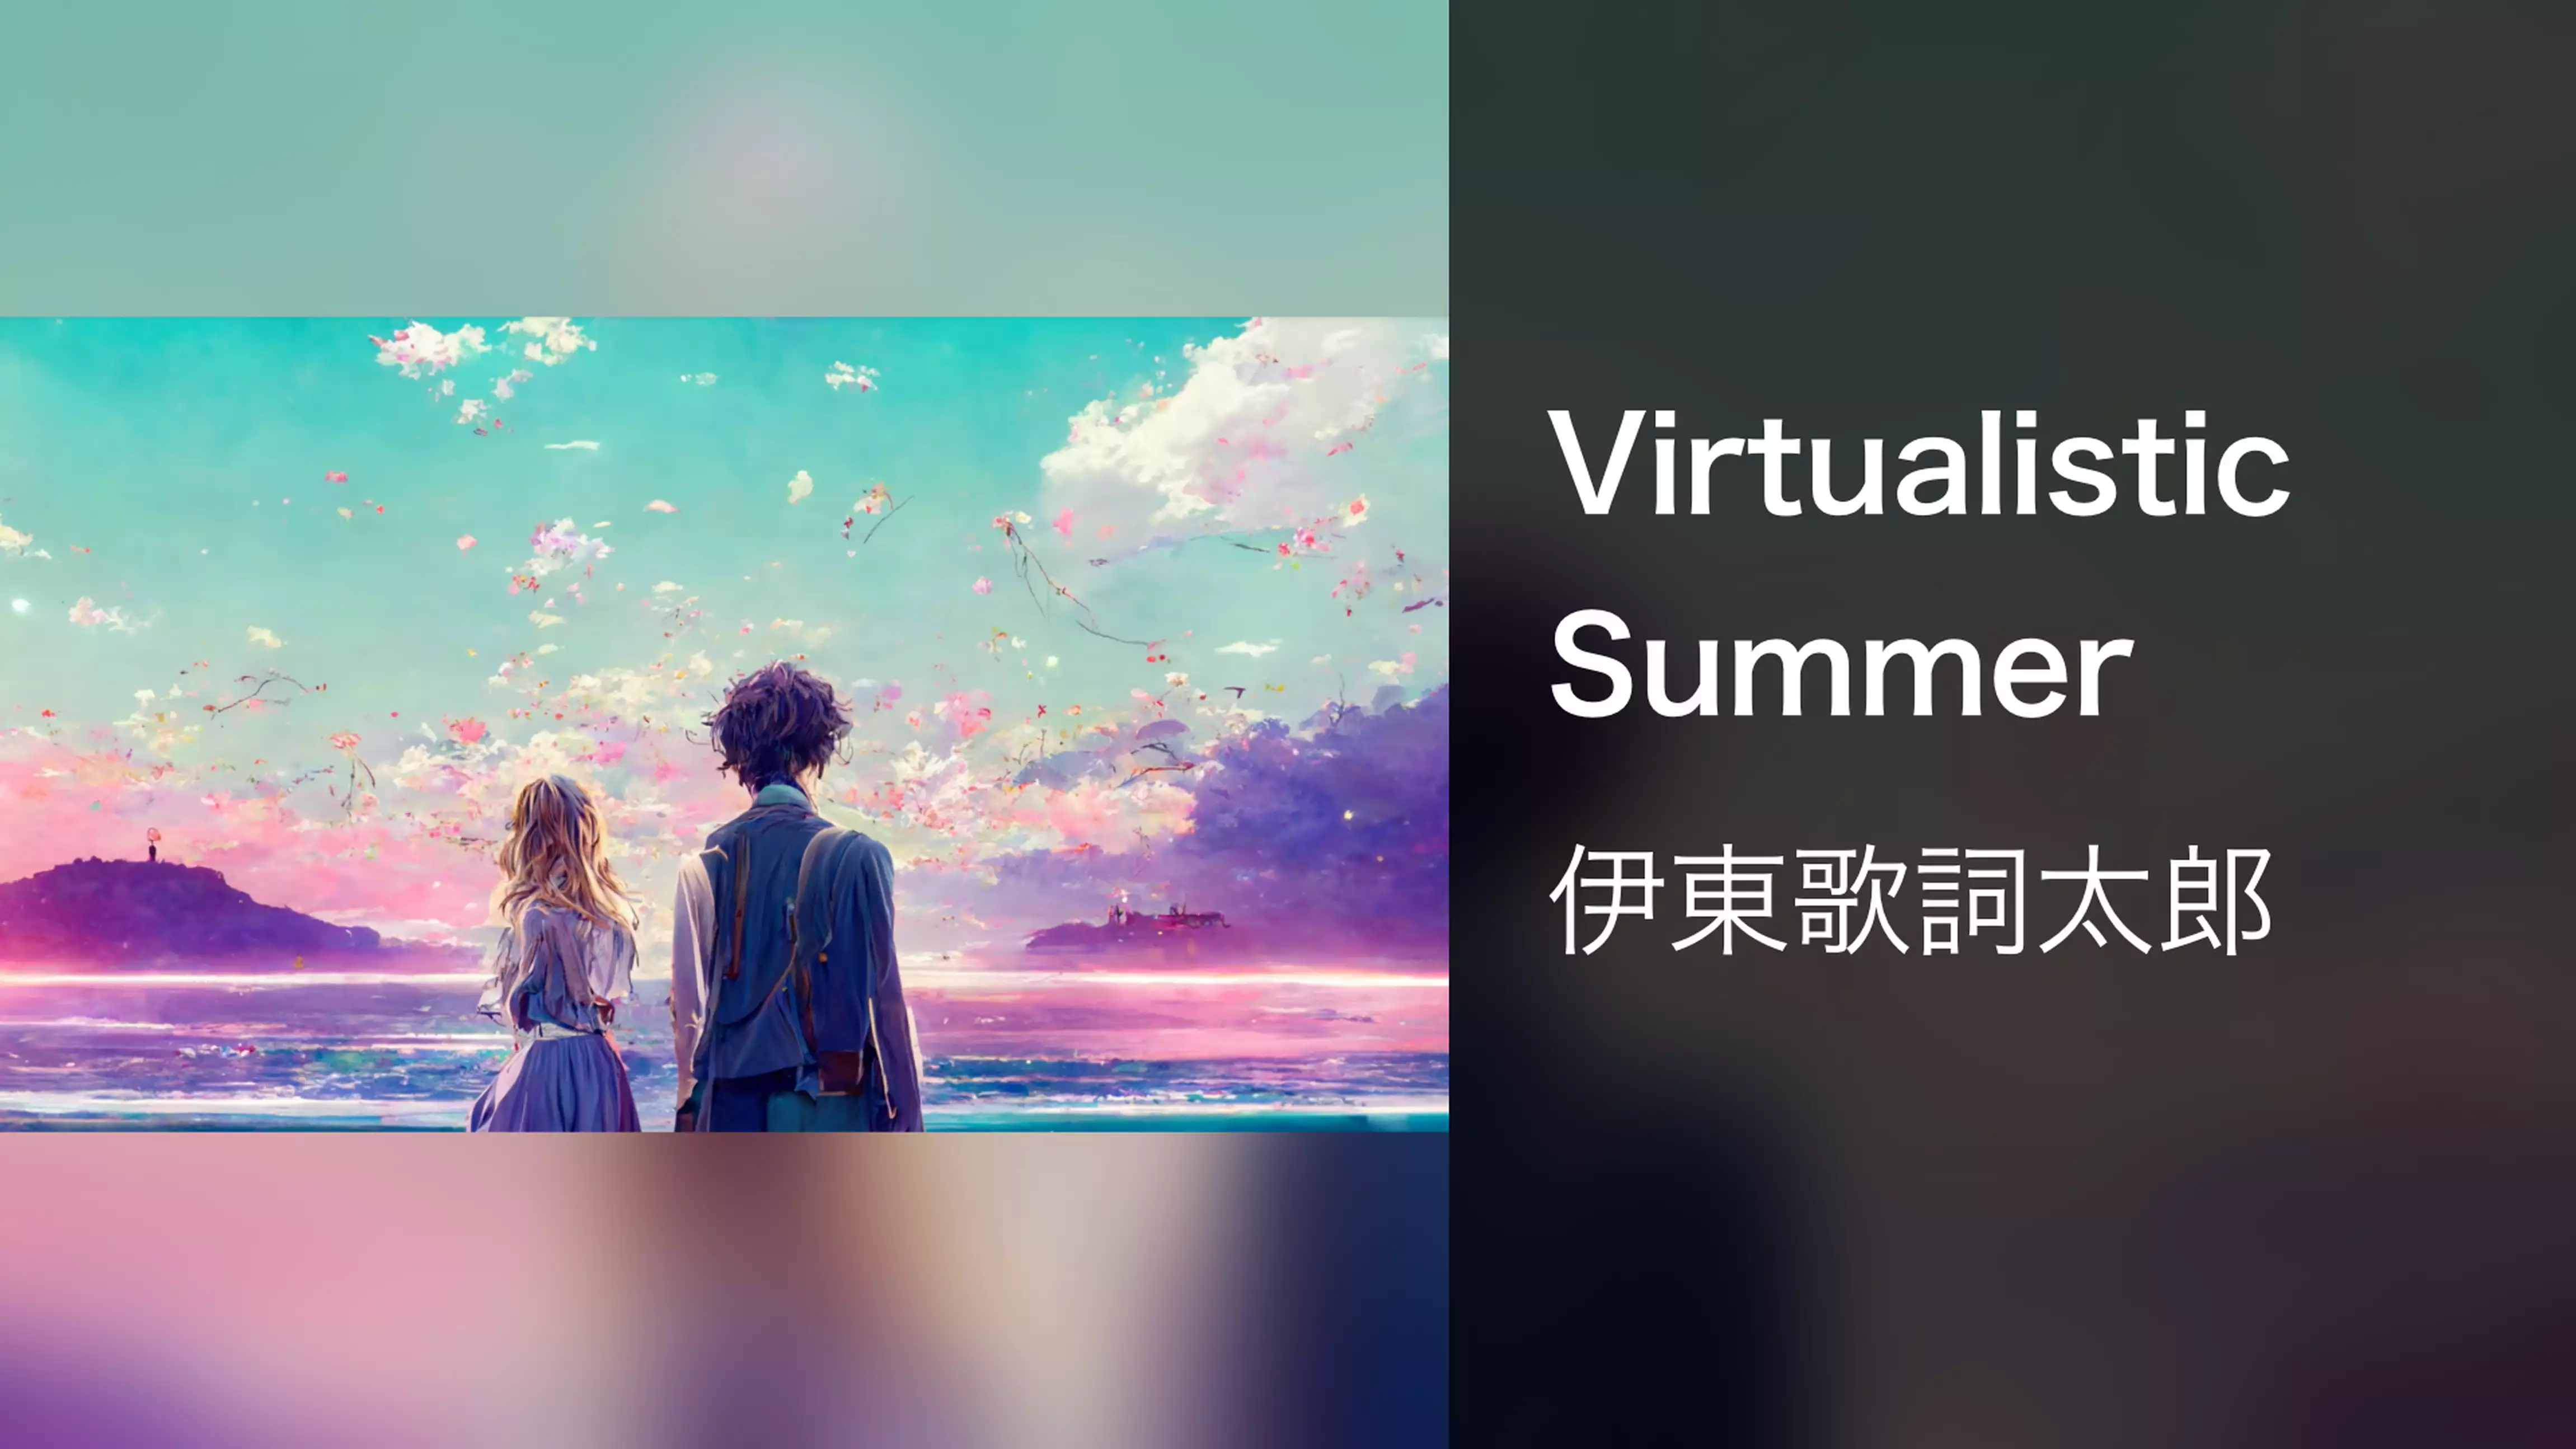 Virtualistic Summer